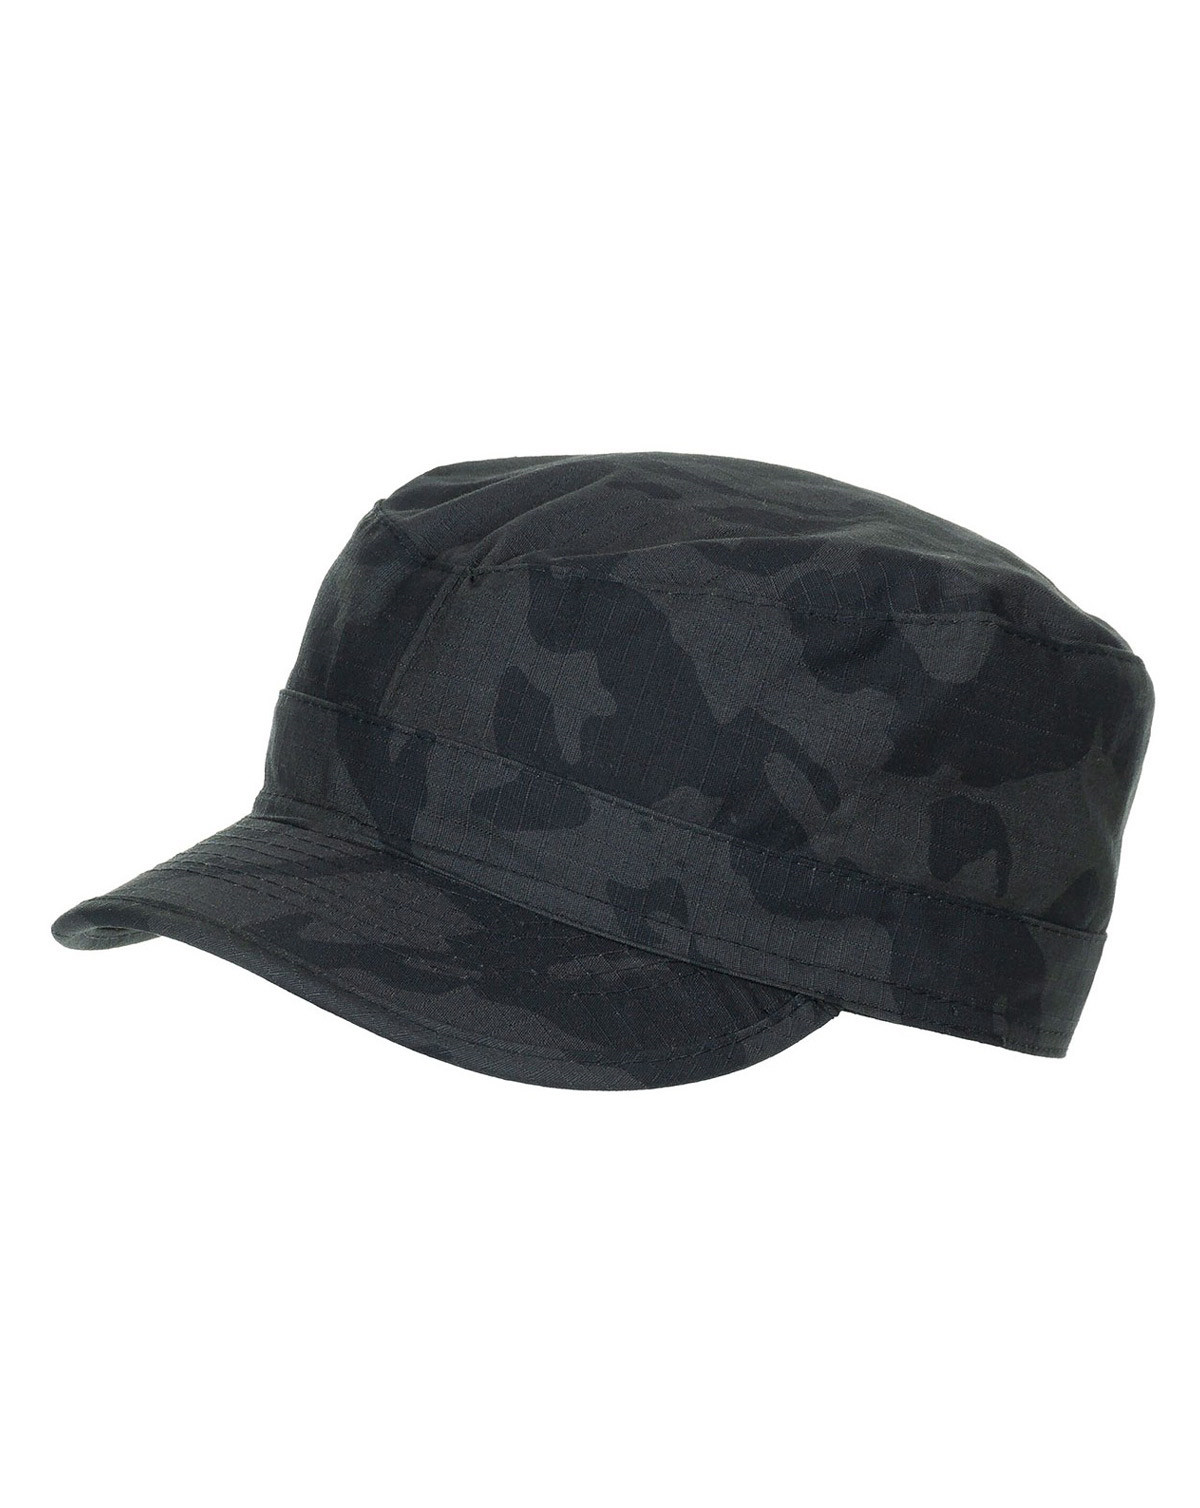 MFH U.S. Army Caps, div. Camouflager (Black Camo, XL)